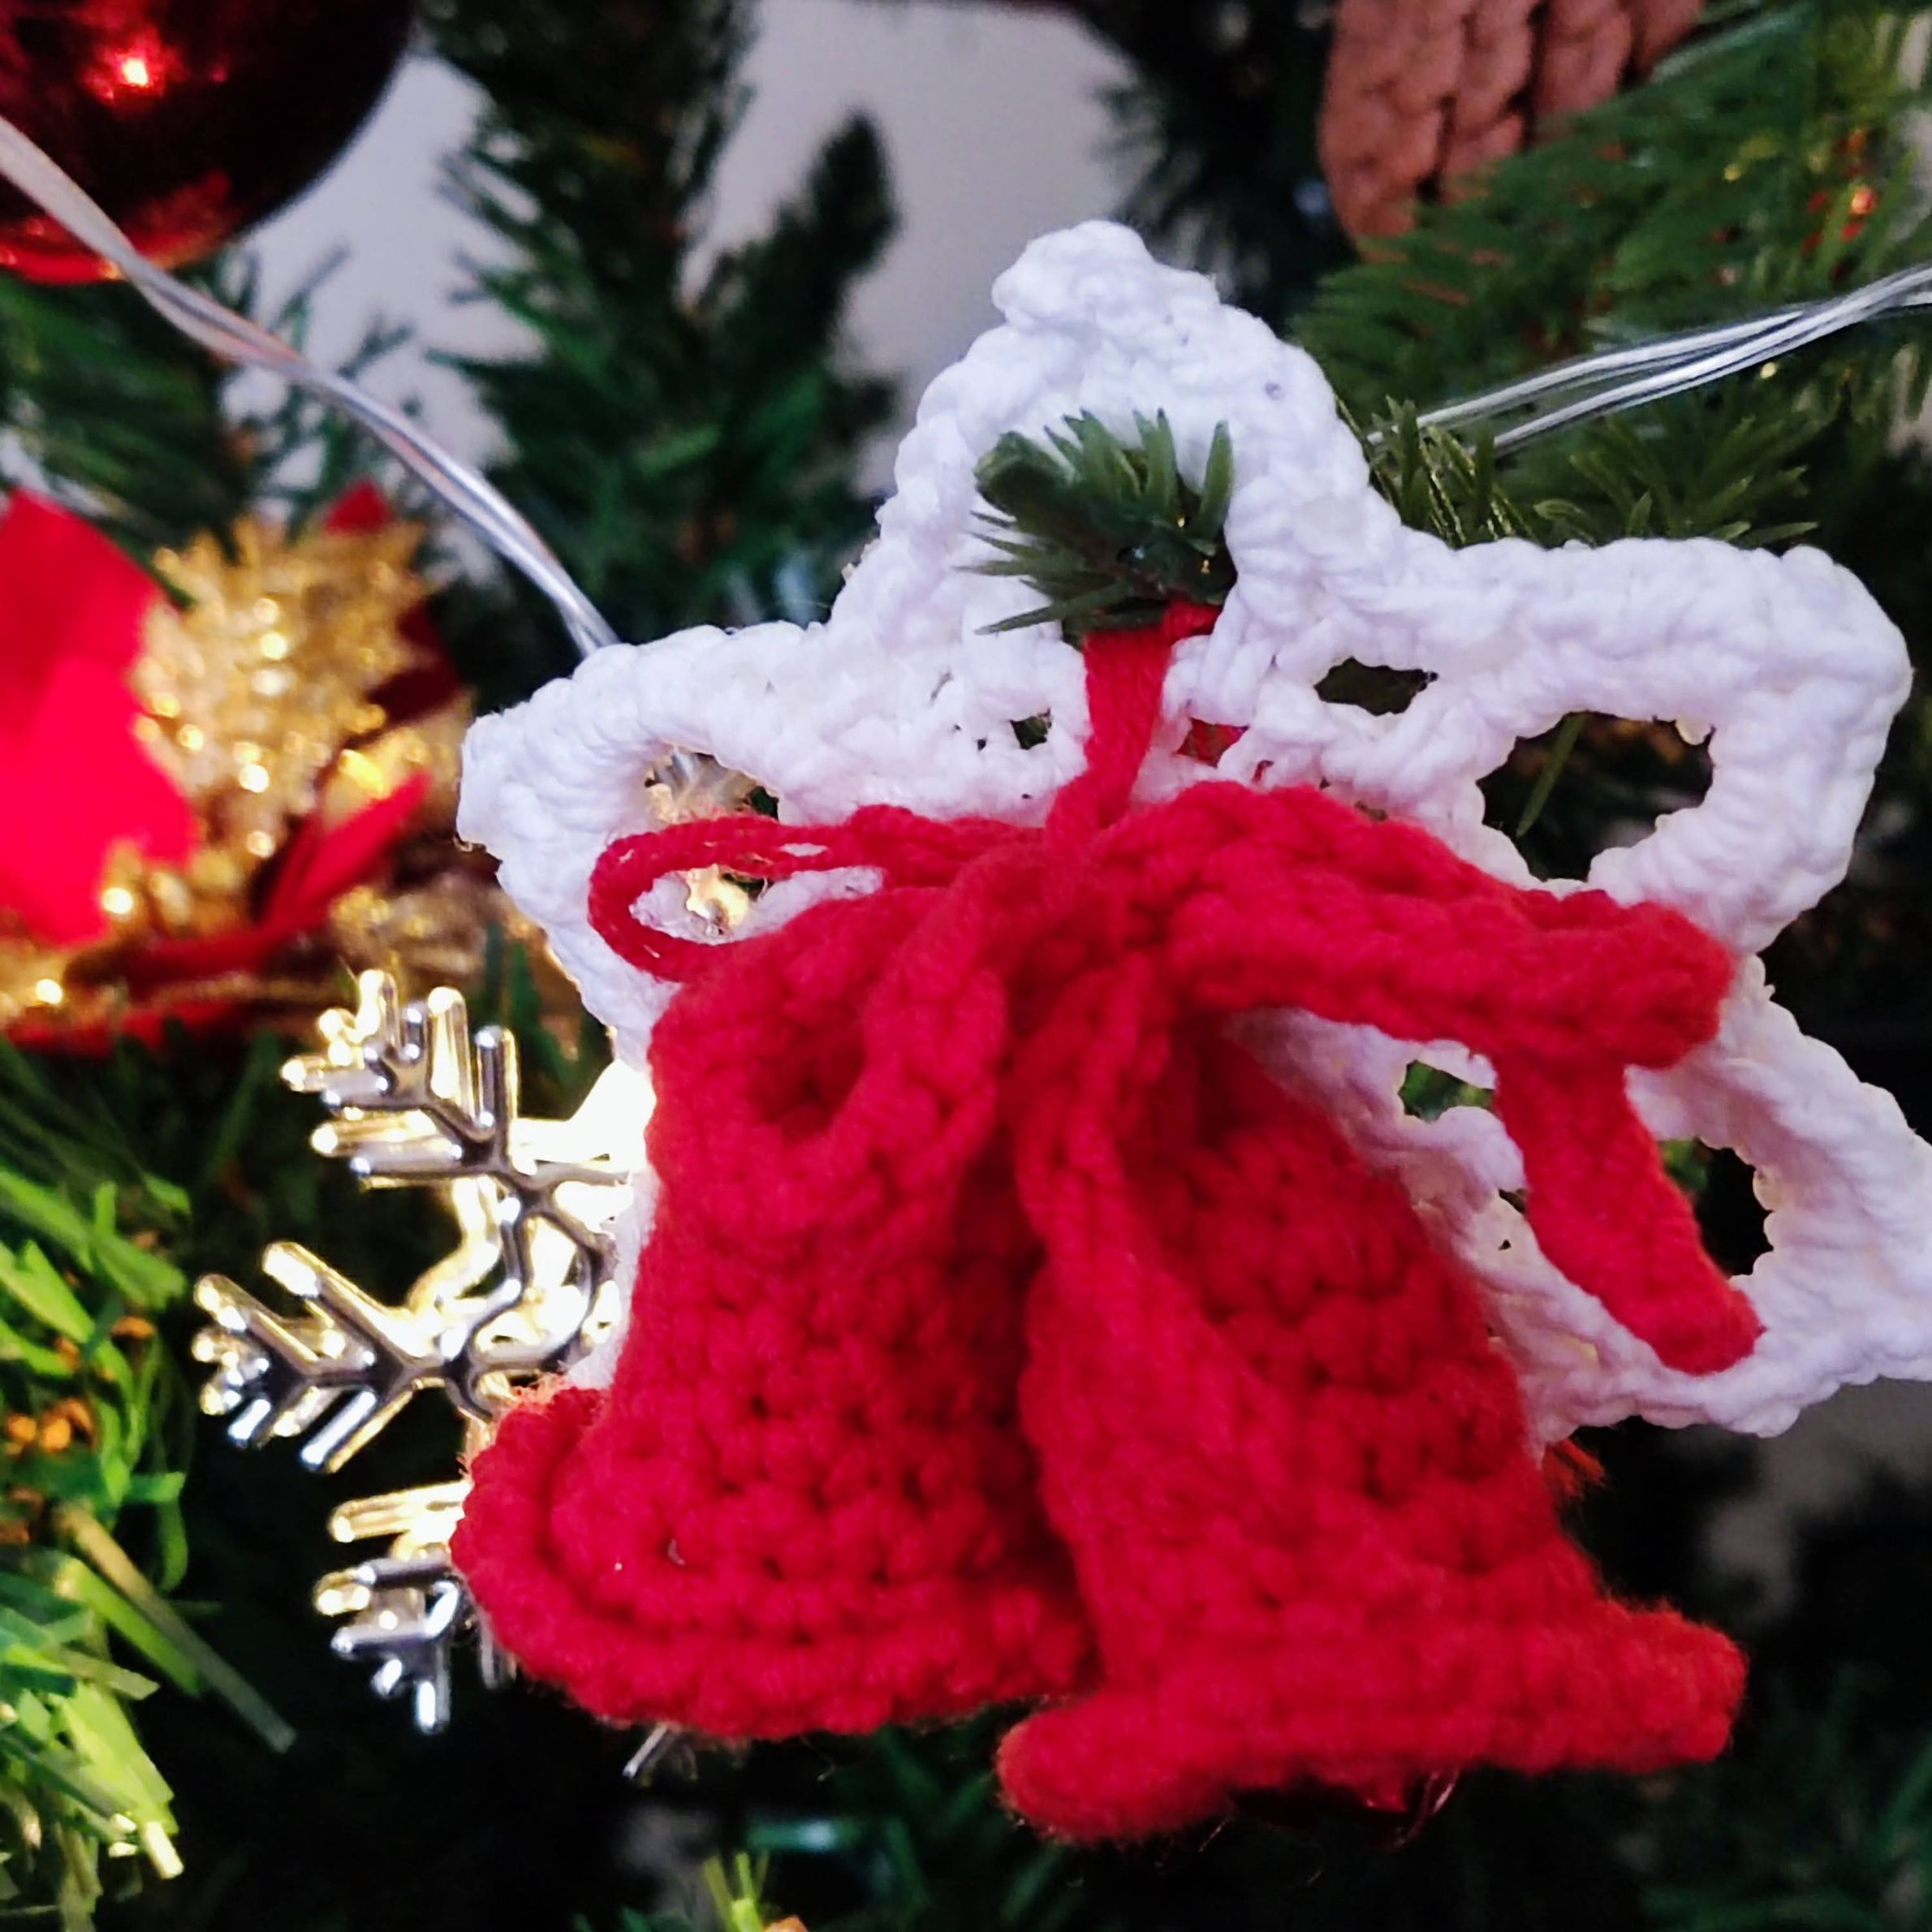 Crochet Bells free patern perfect CHristmas croche tornaments